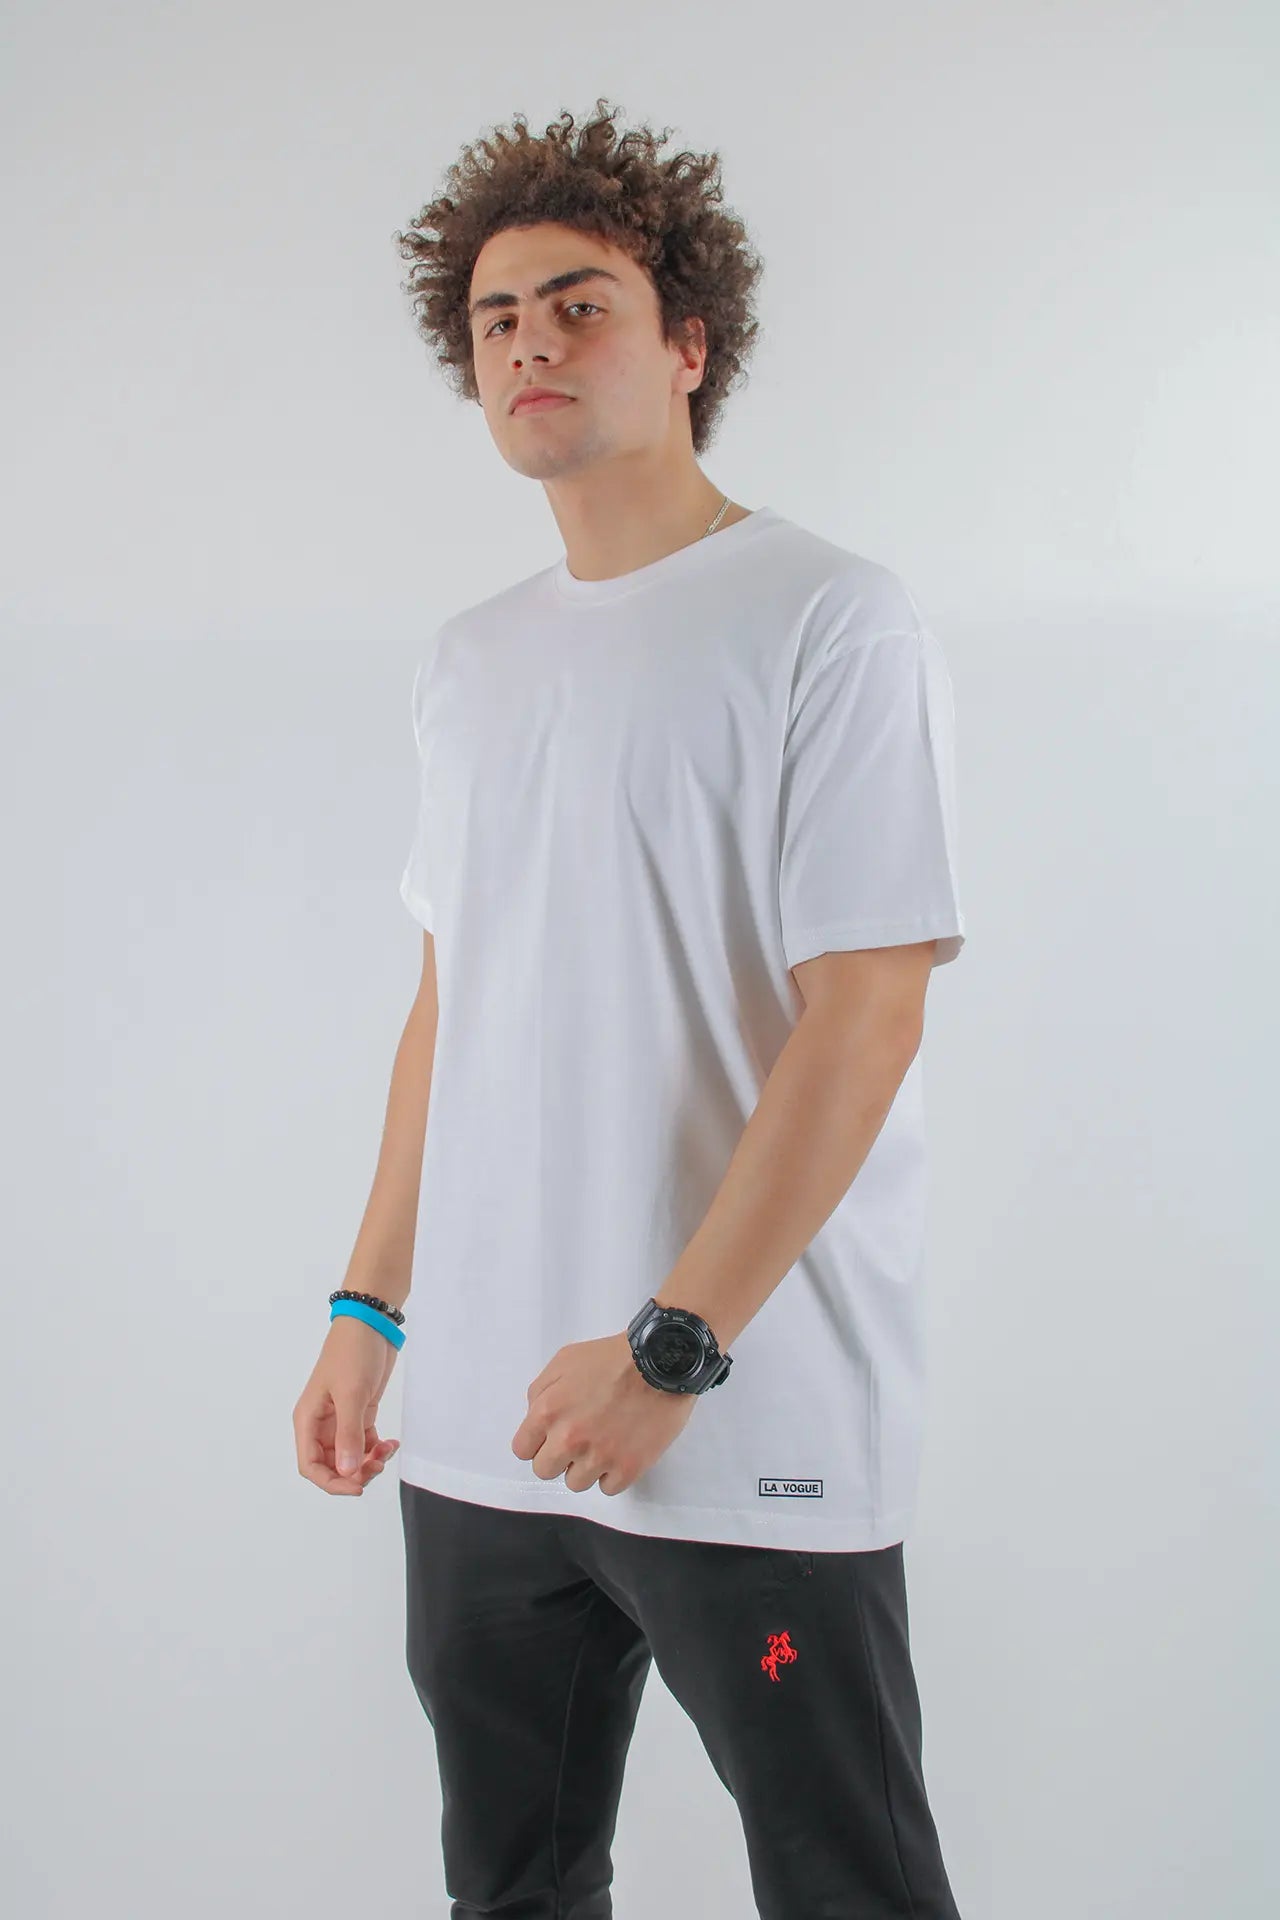 Half-sleeves White T-shirt